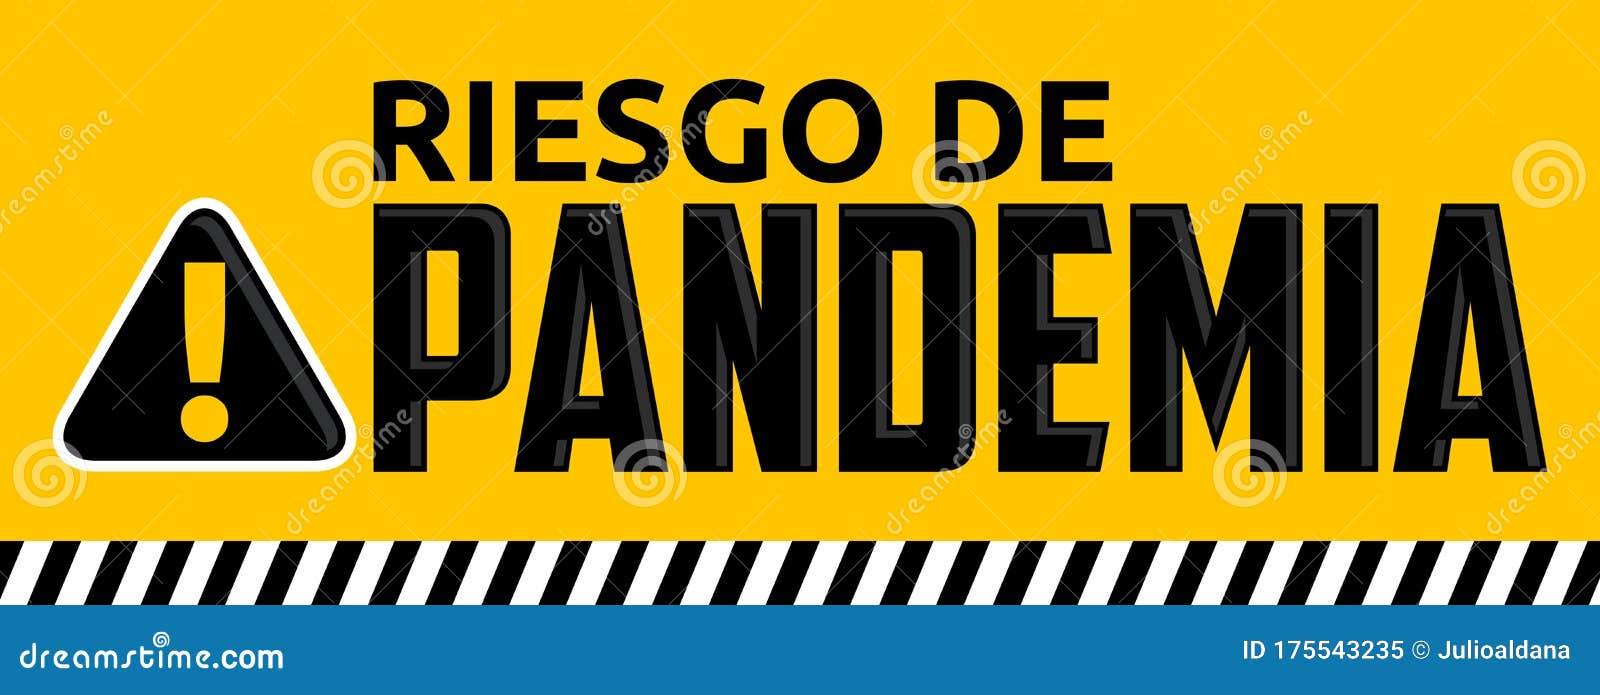 riesgo de pandemia, pandemic risk spanish text  .